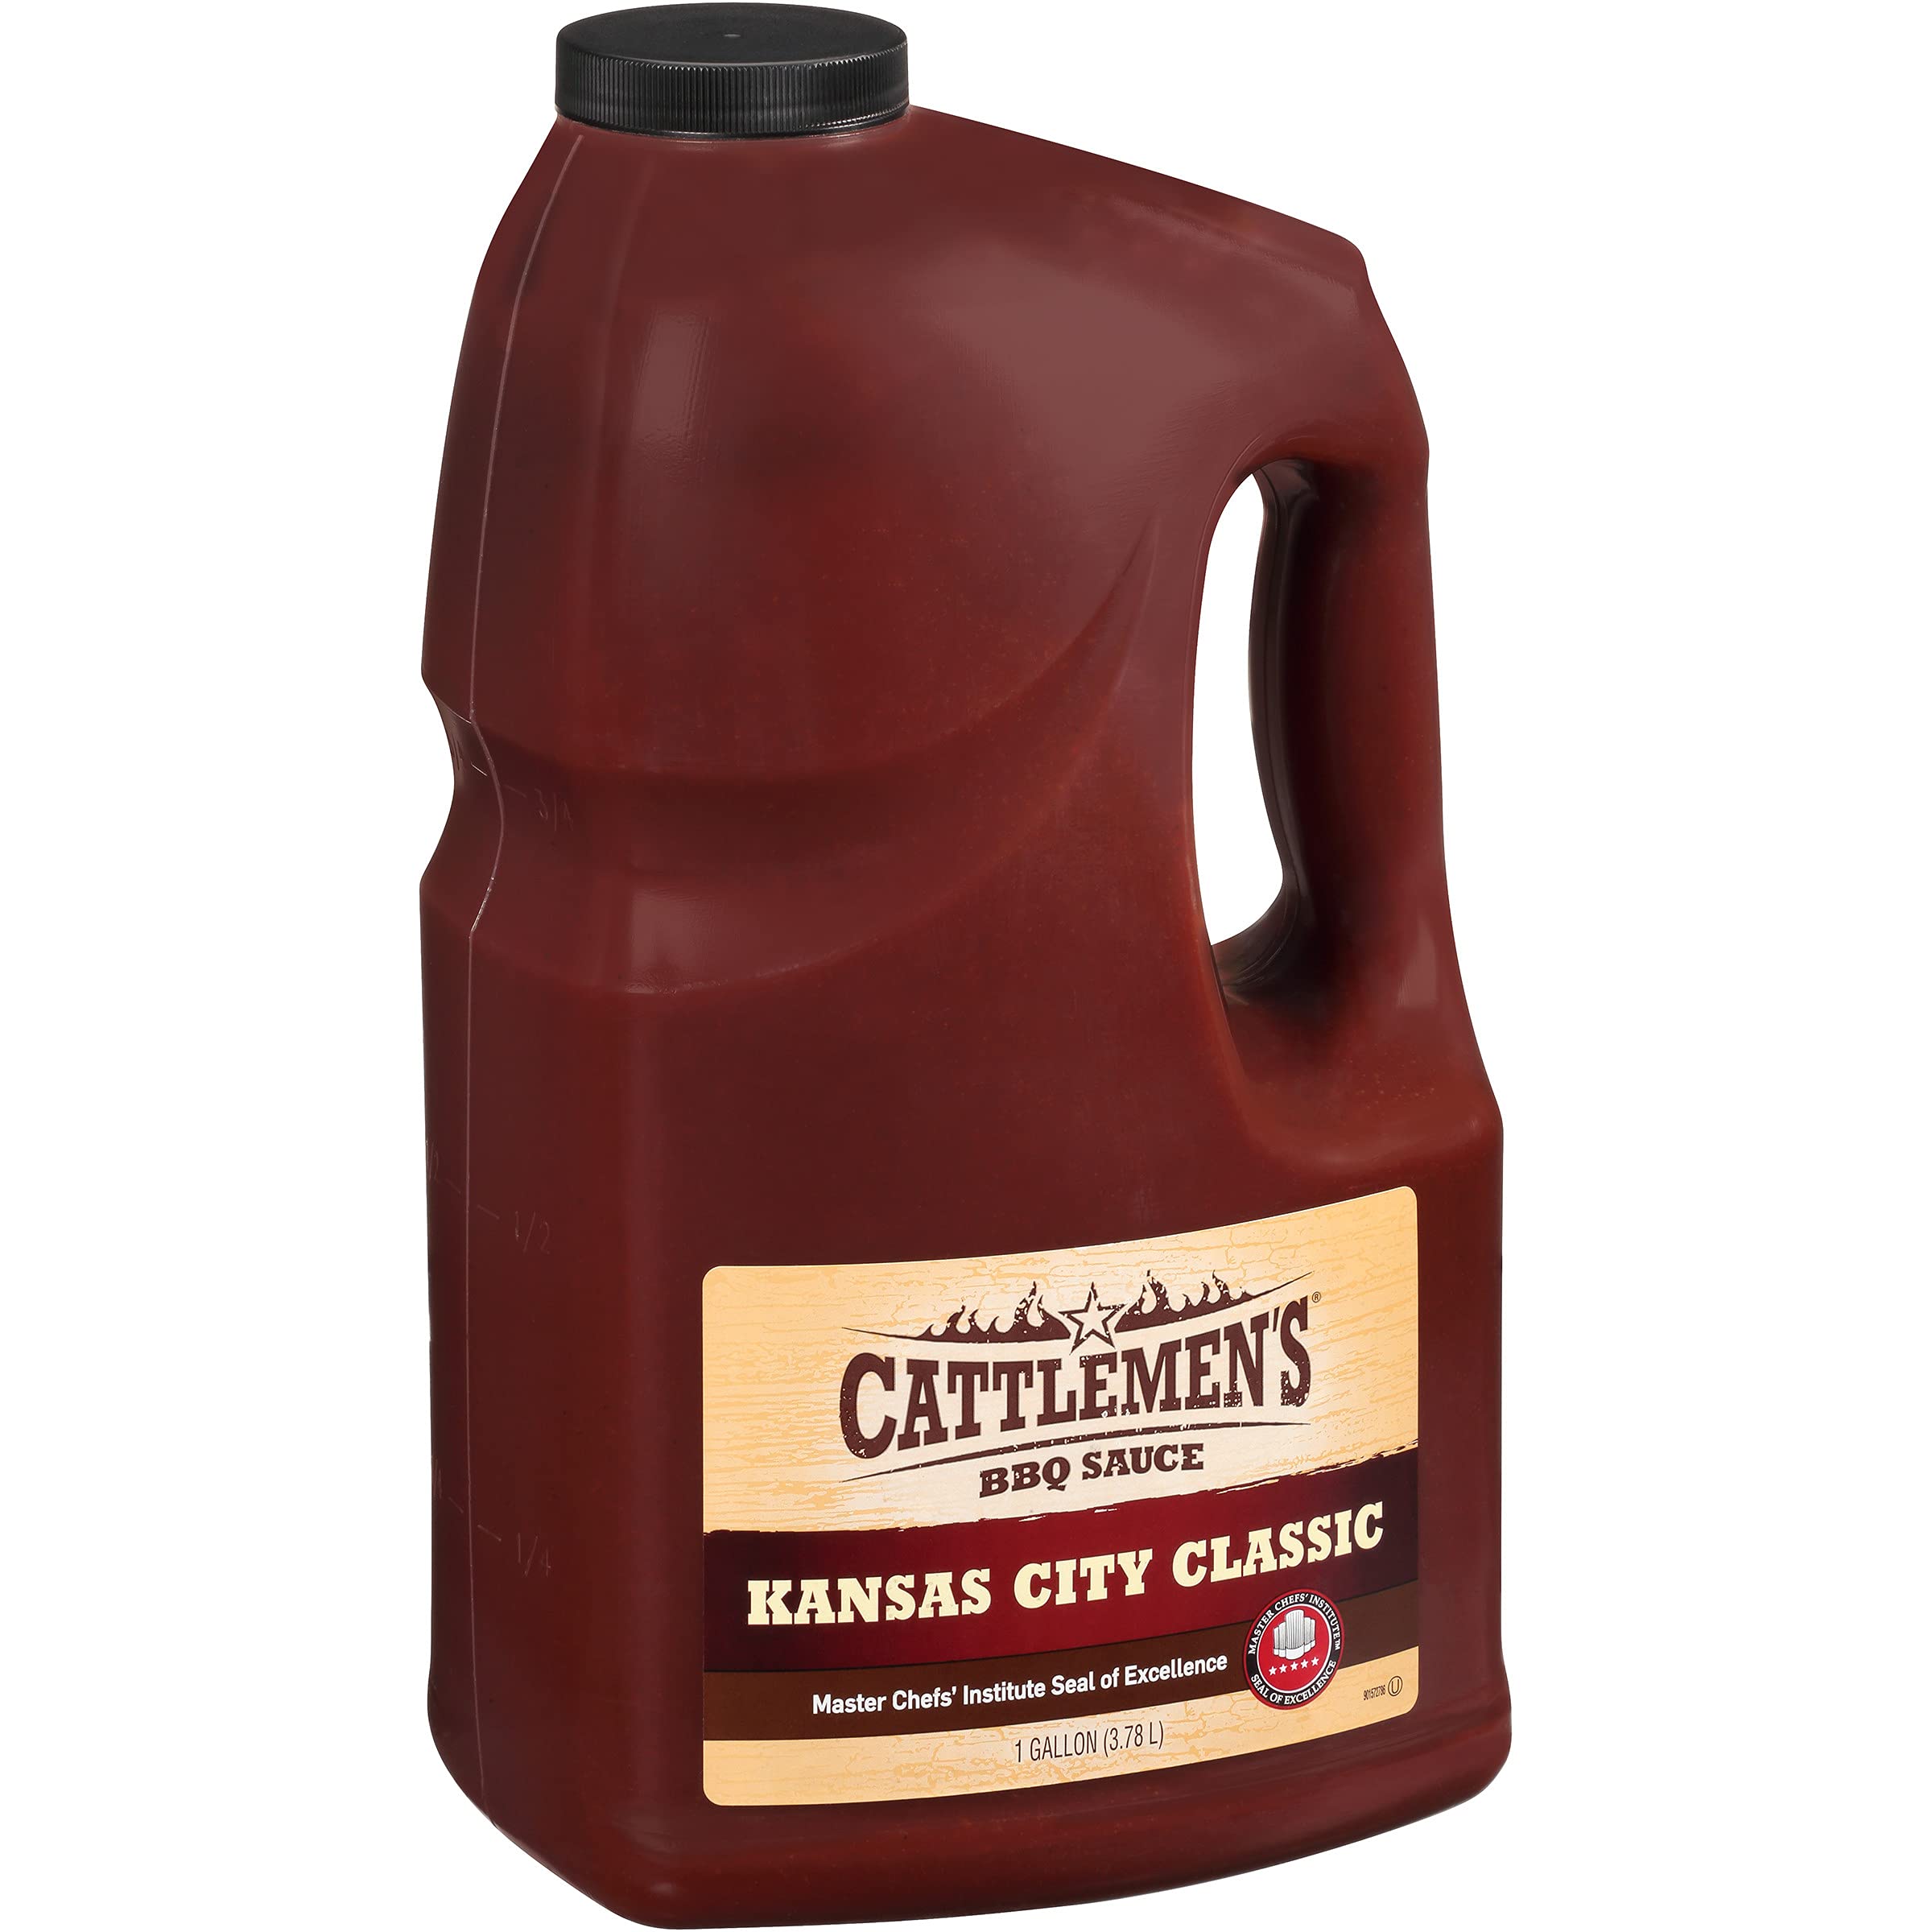 Cattlemen's Kansas City Classic BBQ Sauce, 1 gal - $8.98 at Amazon